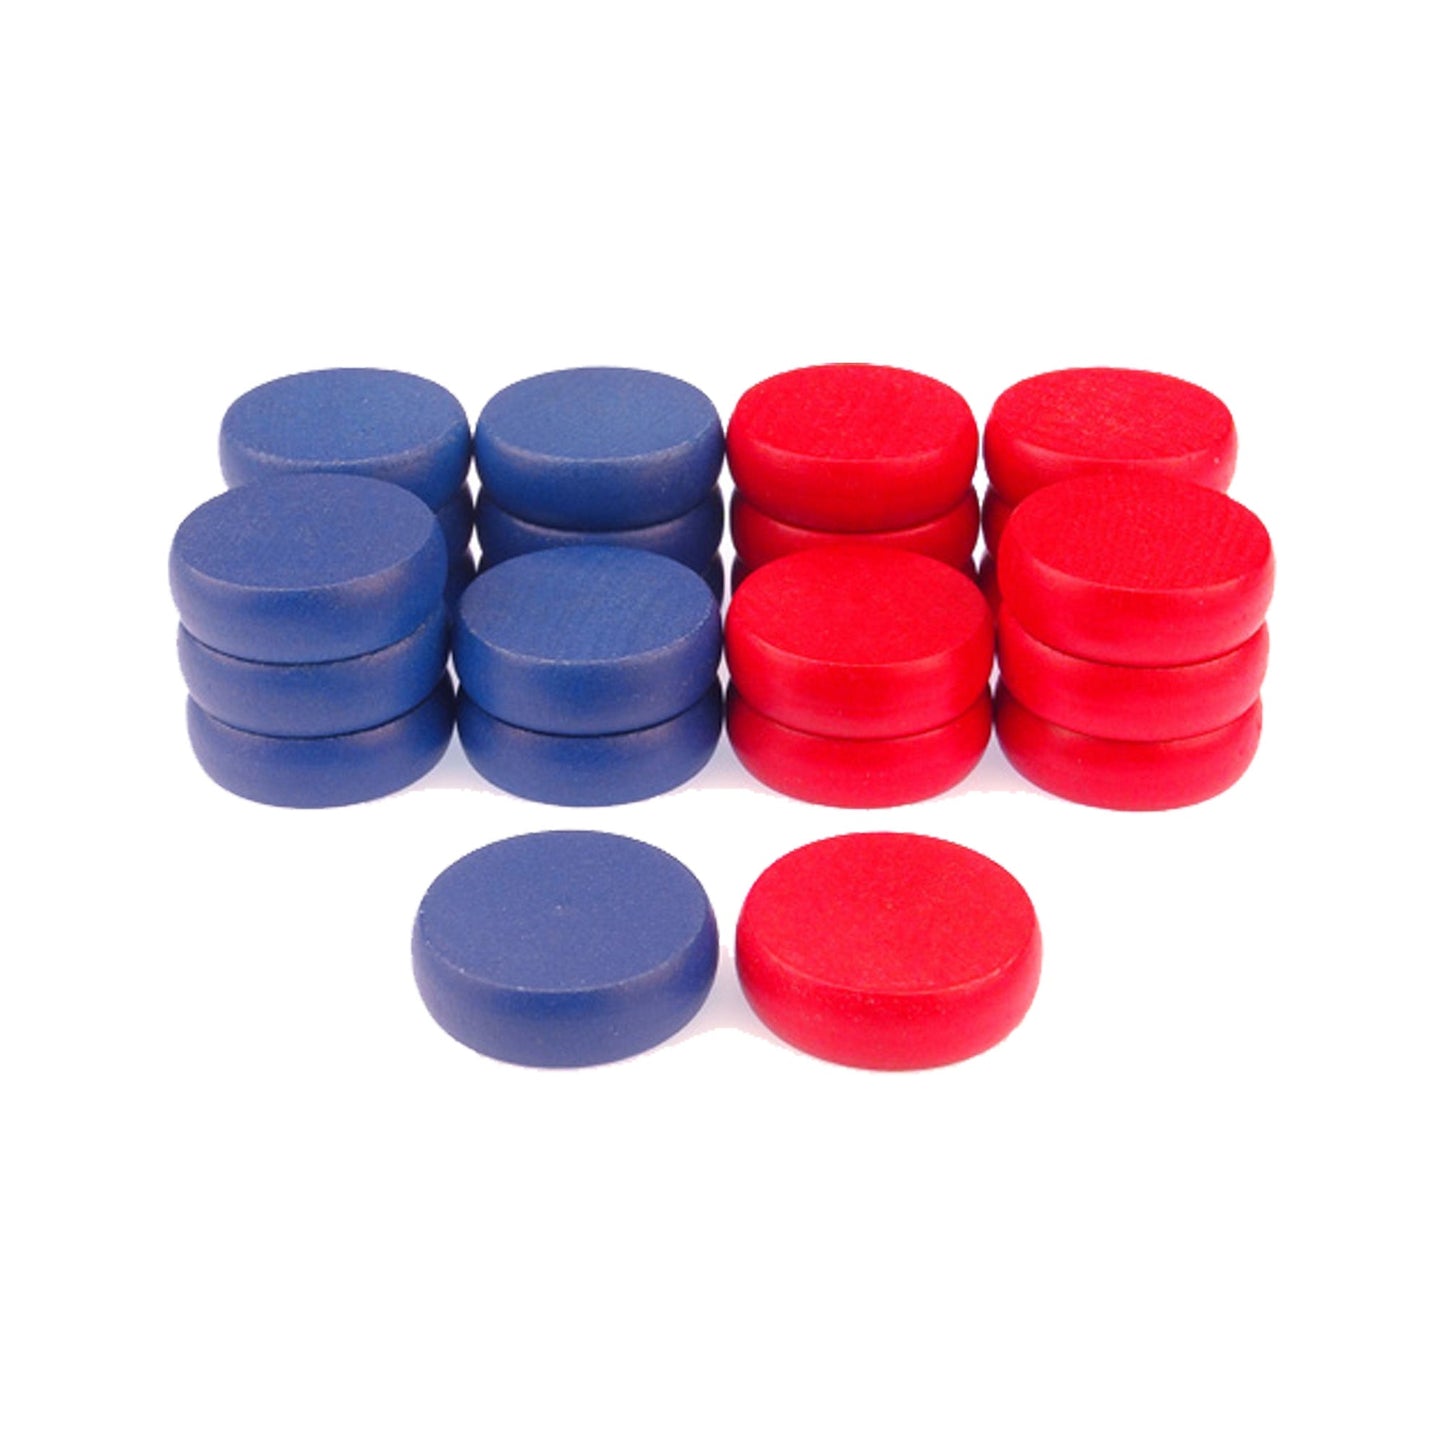 26-blue-red-crokinole tournament discs